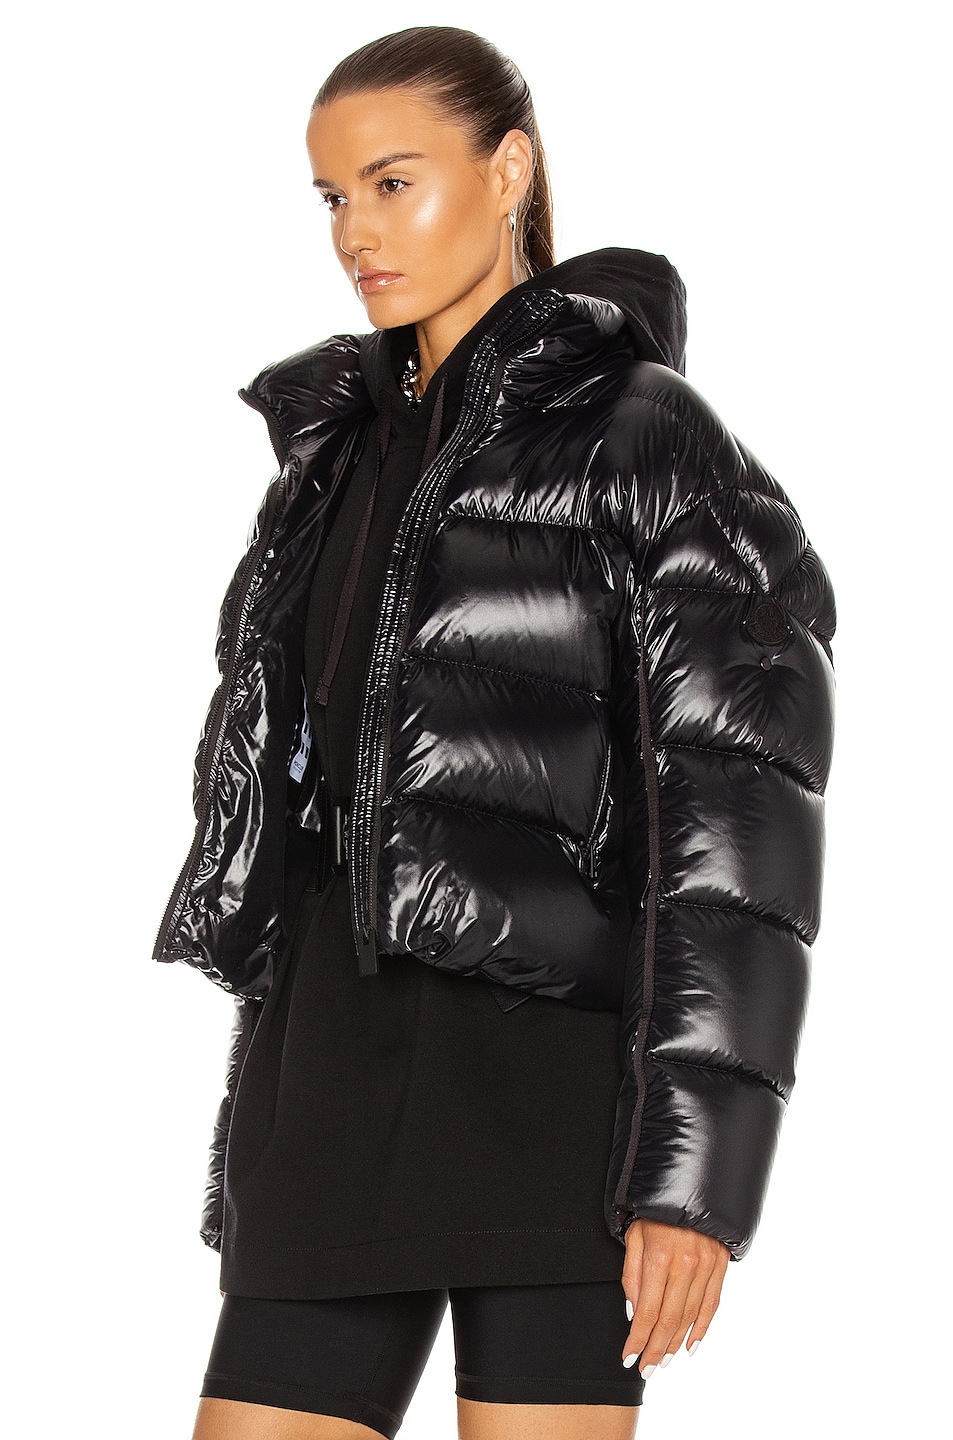 Moncler Genius Moncler Alyx Caliste Jacket in Black | FWRD